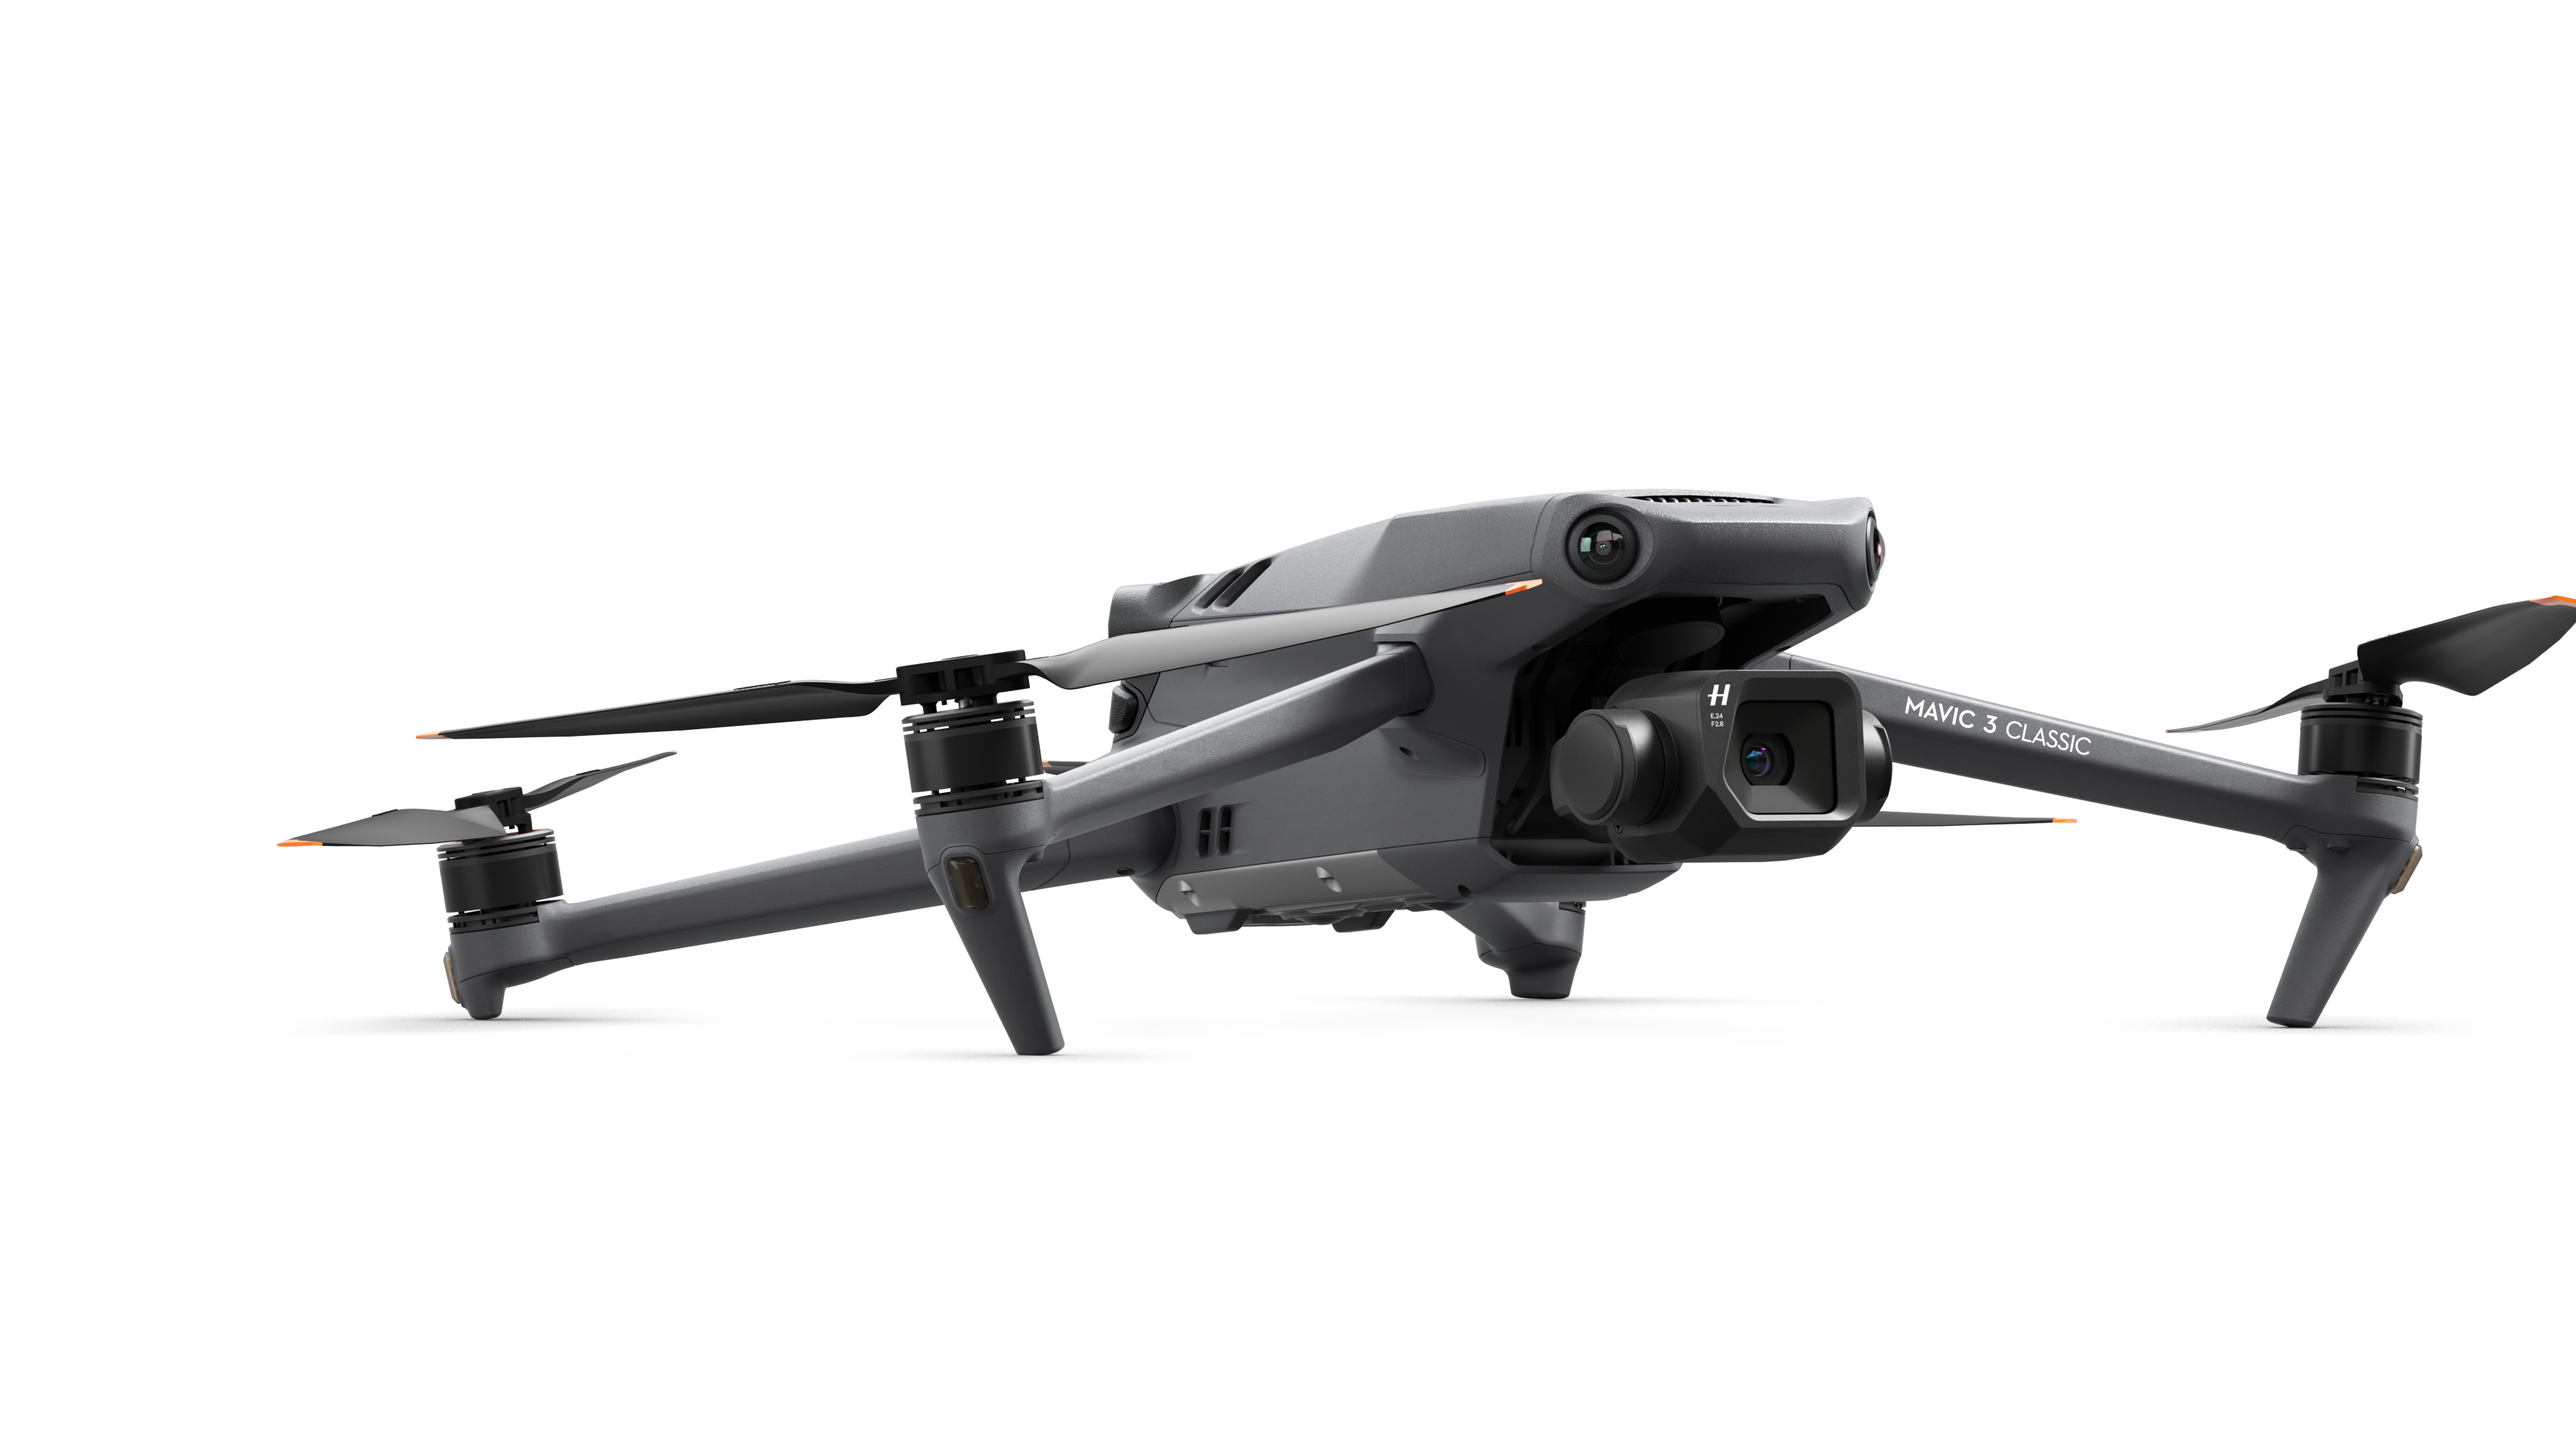 Kits de tren de aterrizaje para Dron DJI Mini 3 Pro - Extensor de altu –  RCDrone